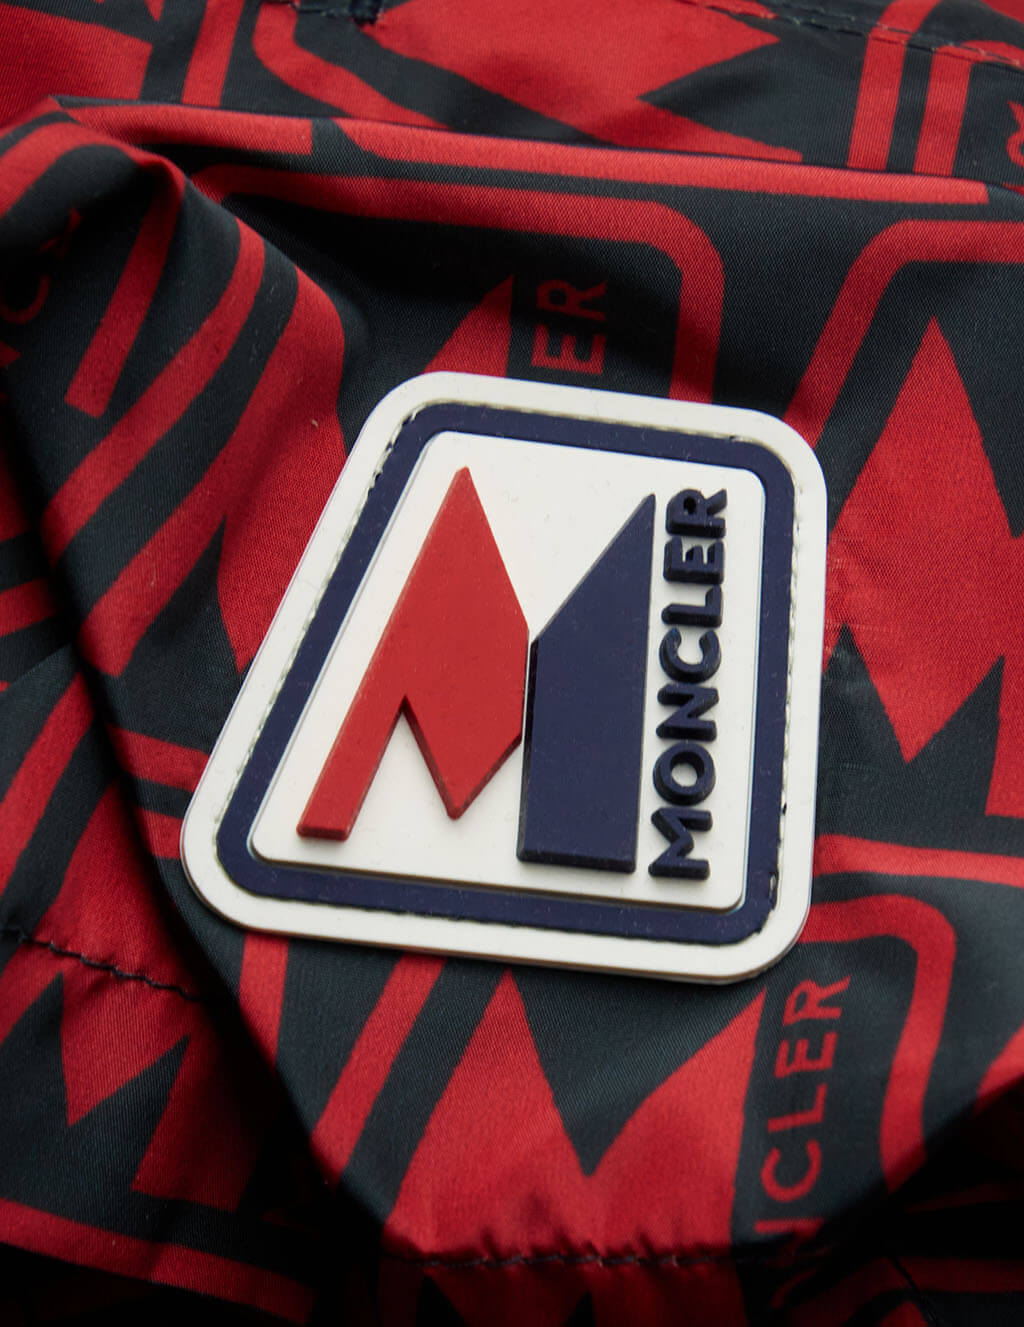 moncler logo